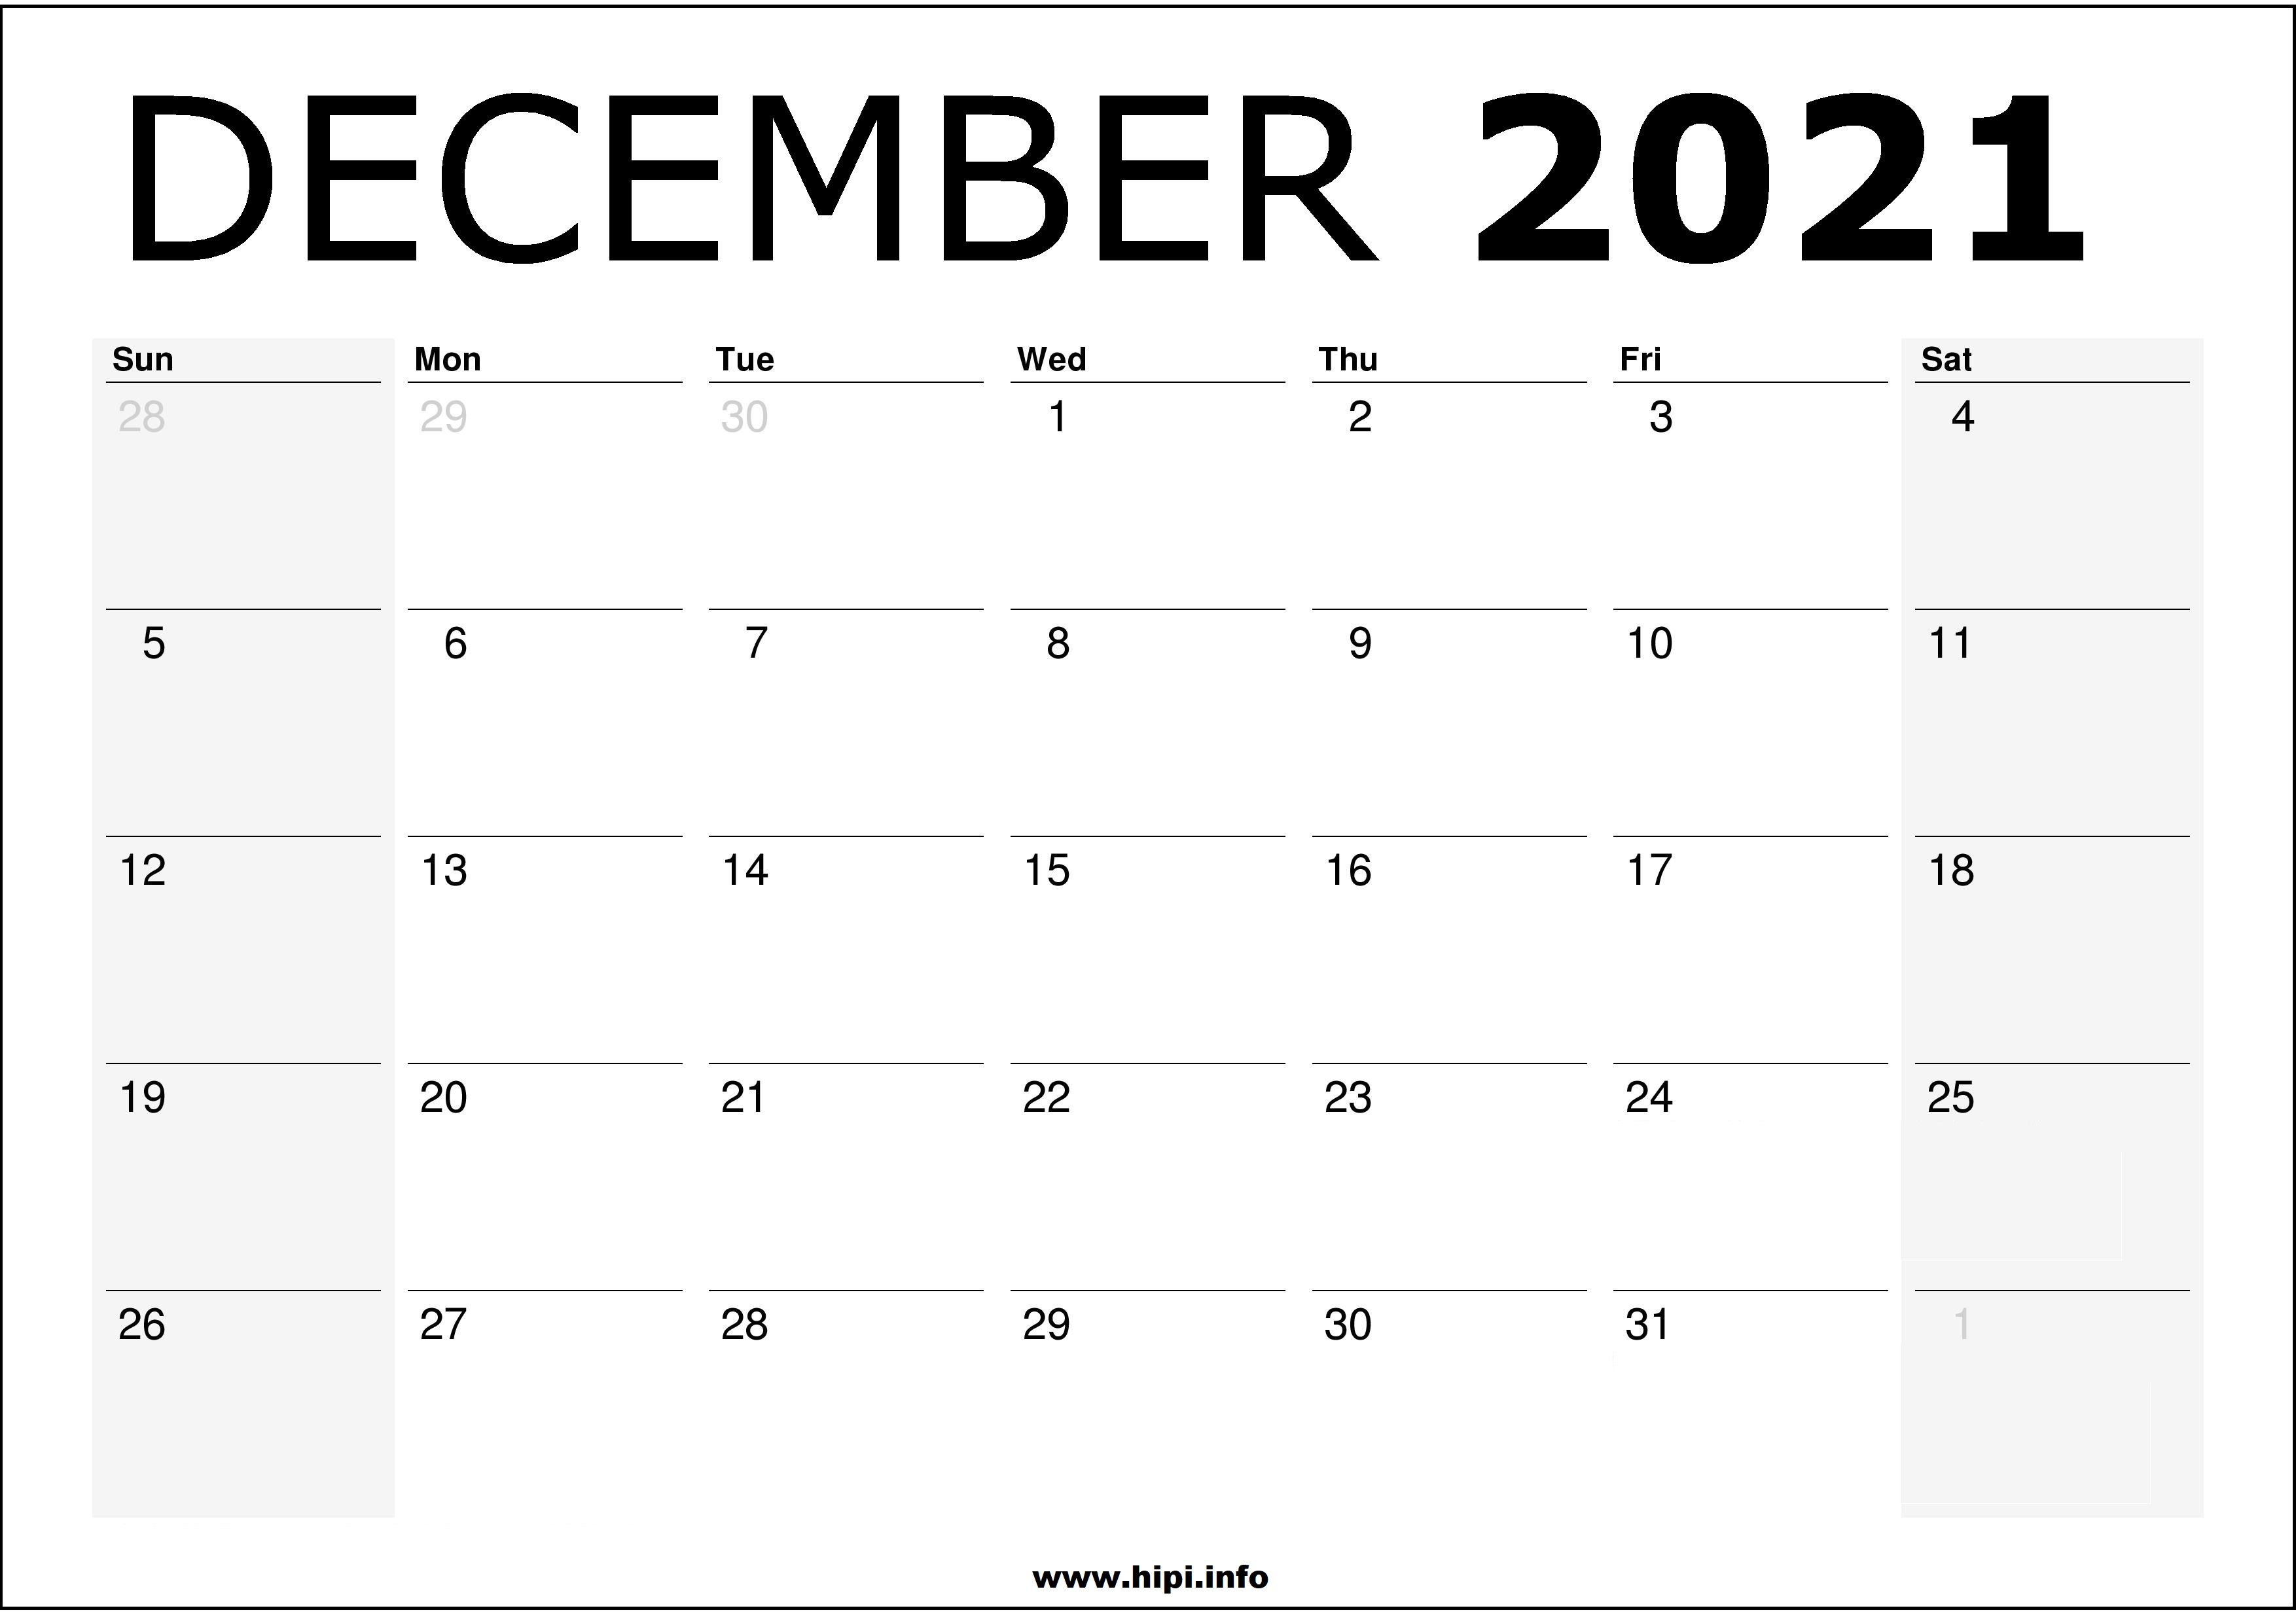 December 2021 Calendar Wallpapers Wallpaper Cave